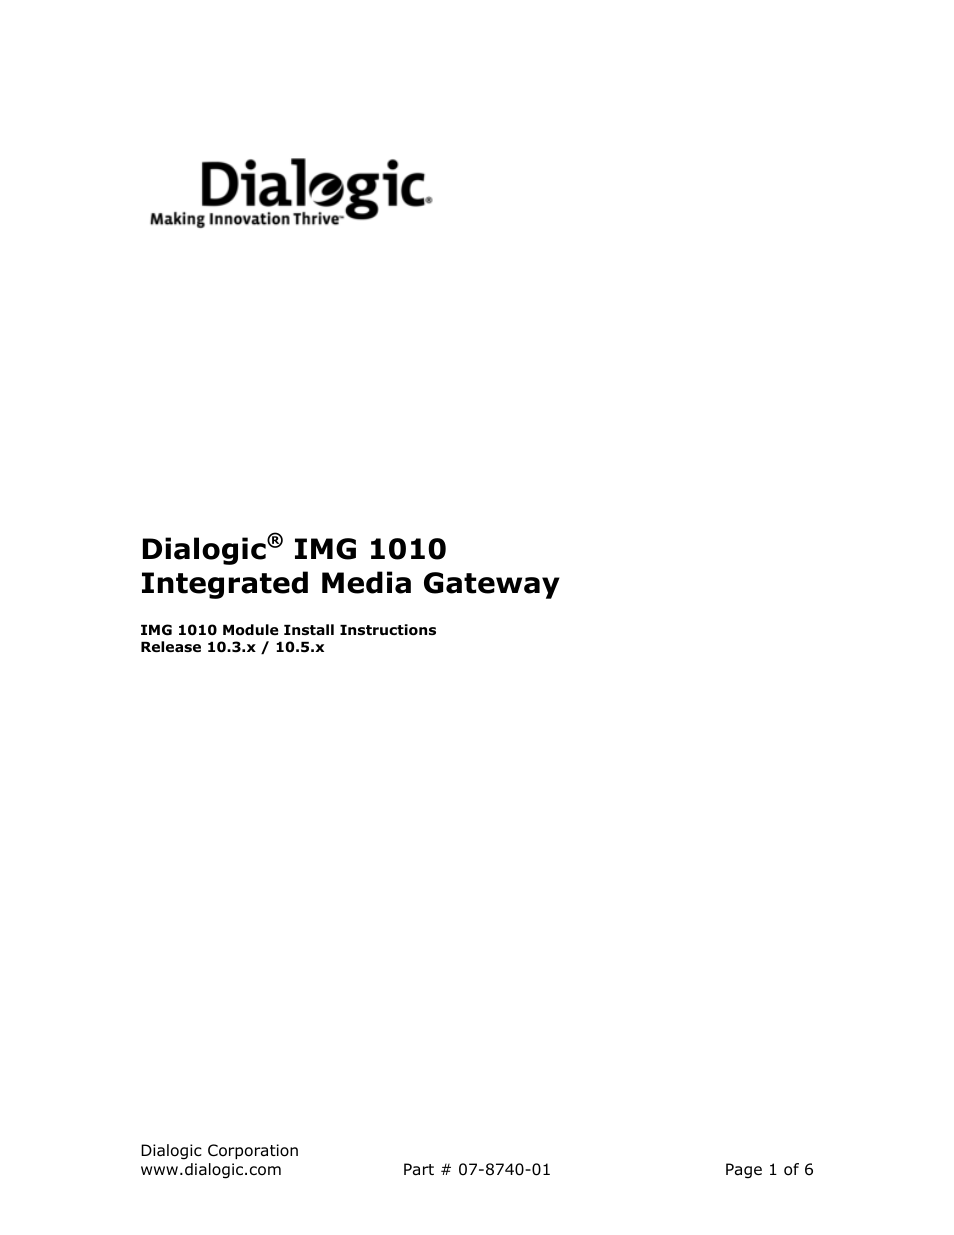 Integrated Media Gateways IMG 1010